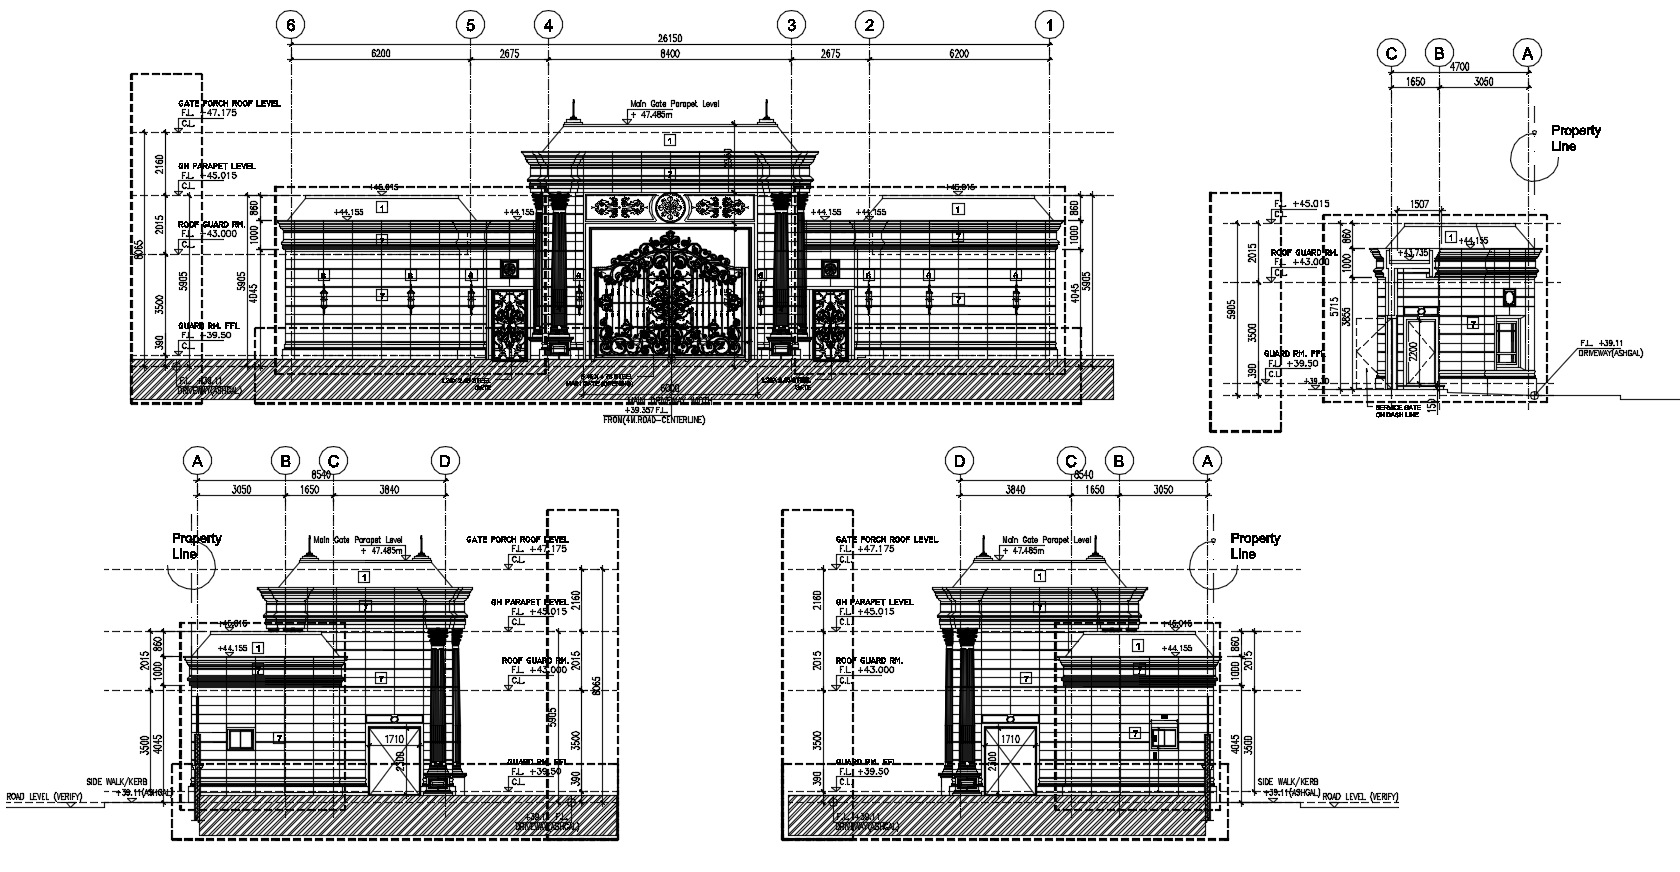 【CAD Details】Main Gate Structure CAD Details CAD Files, DWG files, Plans and Details